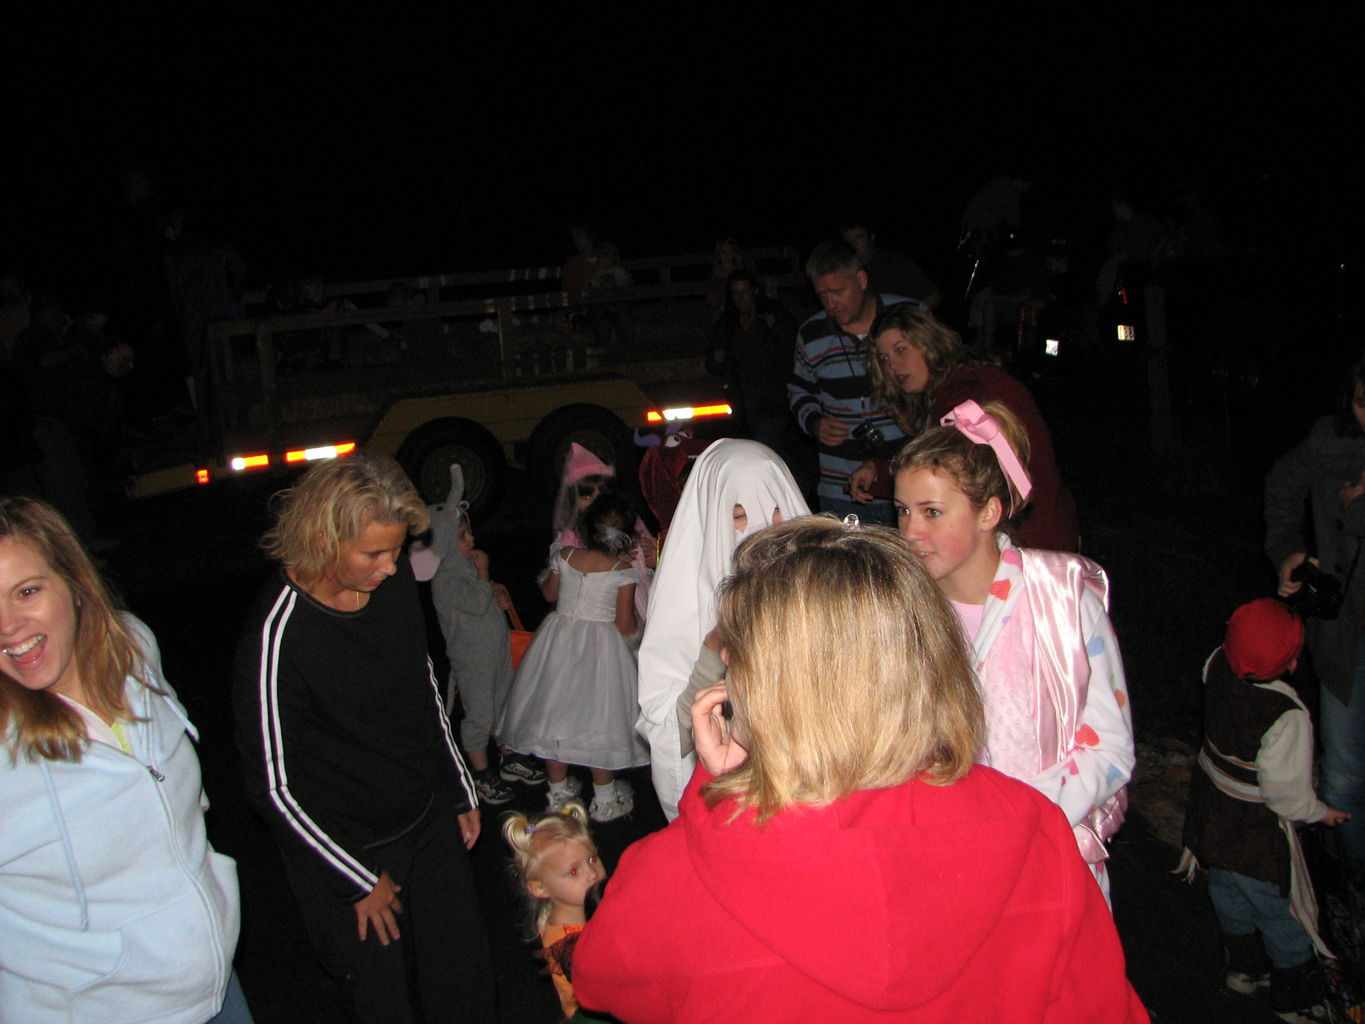 Halloween 2006 - River Ridge
